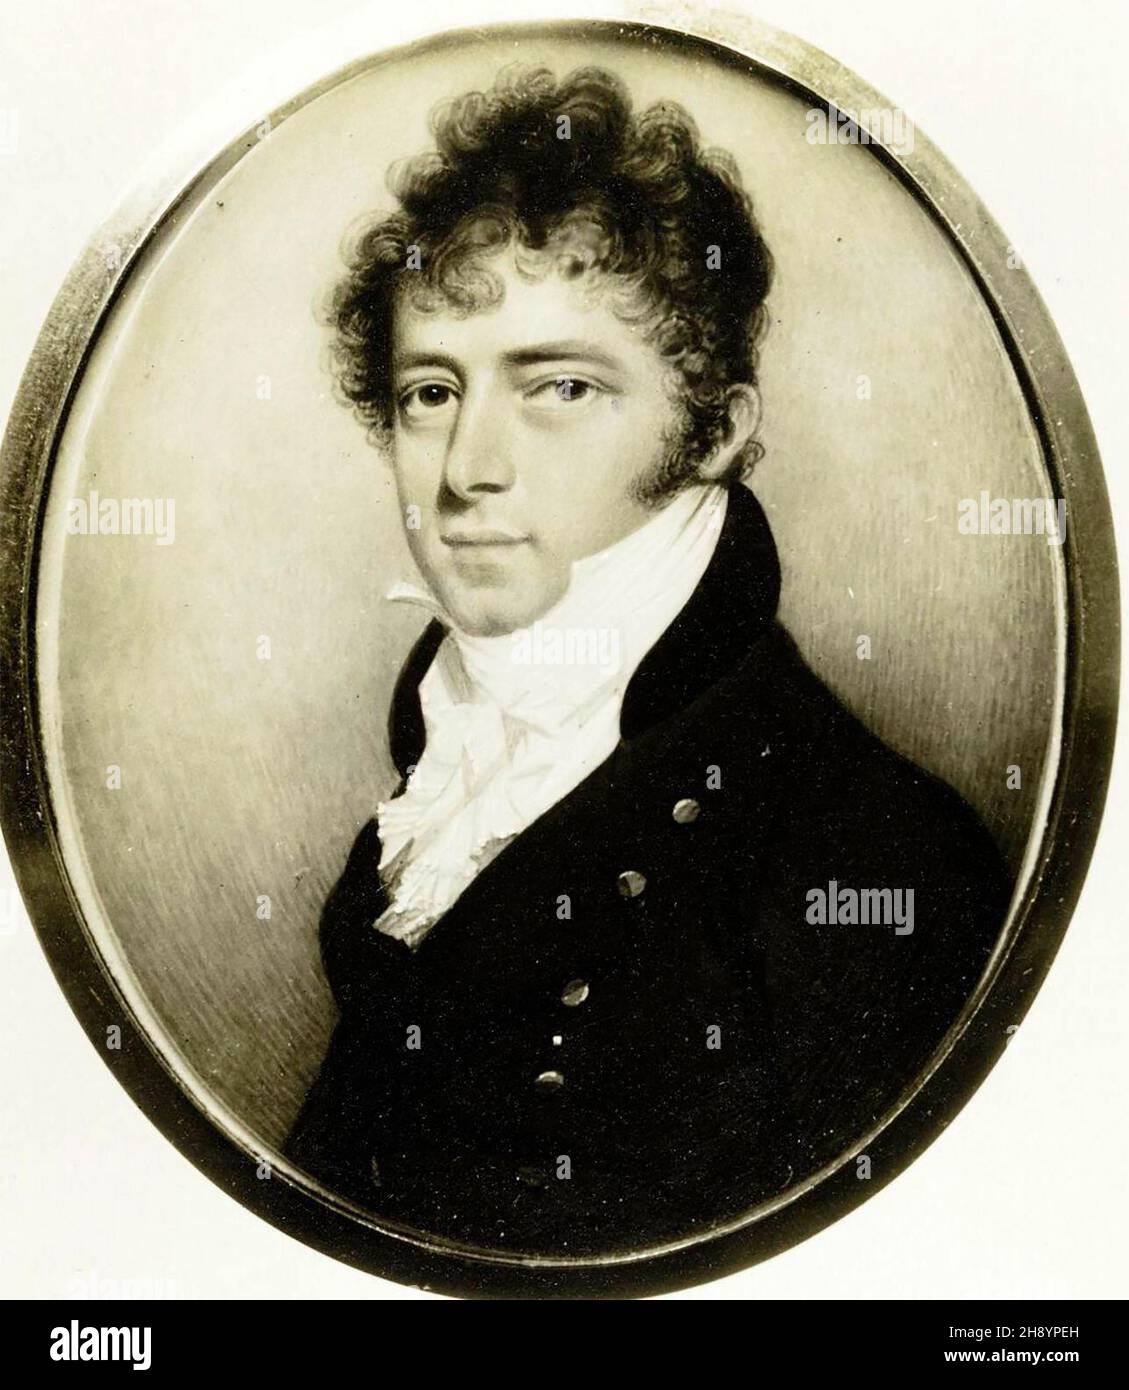 Joseph Alston - Joseph Alston (10. November 1779−10. September 1816) war 44th Gouverneur von South Carolina von 1812 bis 1814. Stockfoto